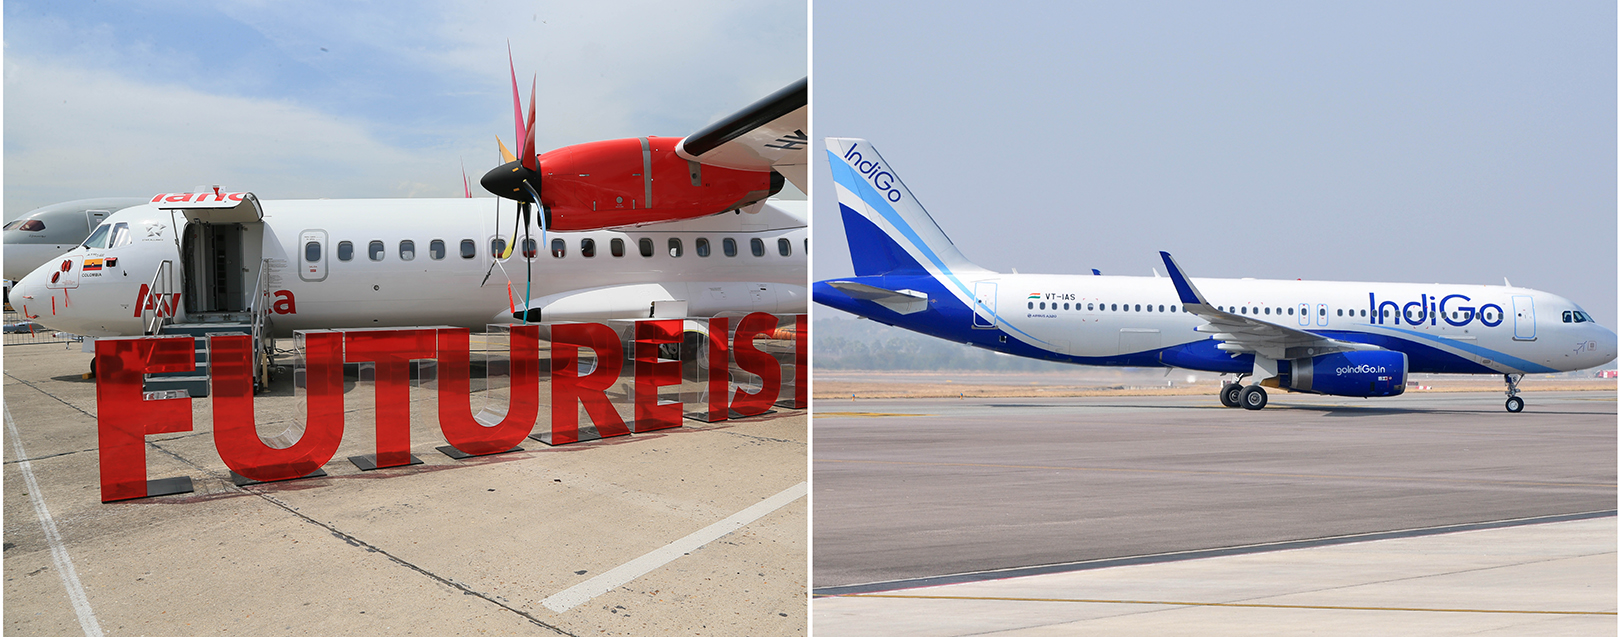 IndiGo to buy 50 ATR planes worth $1.3 billion